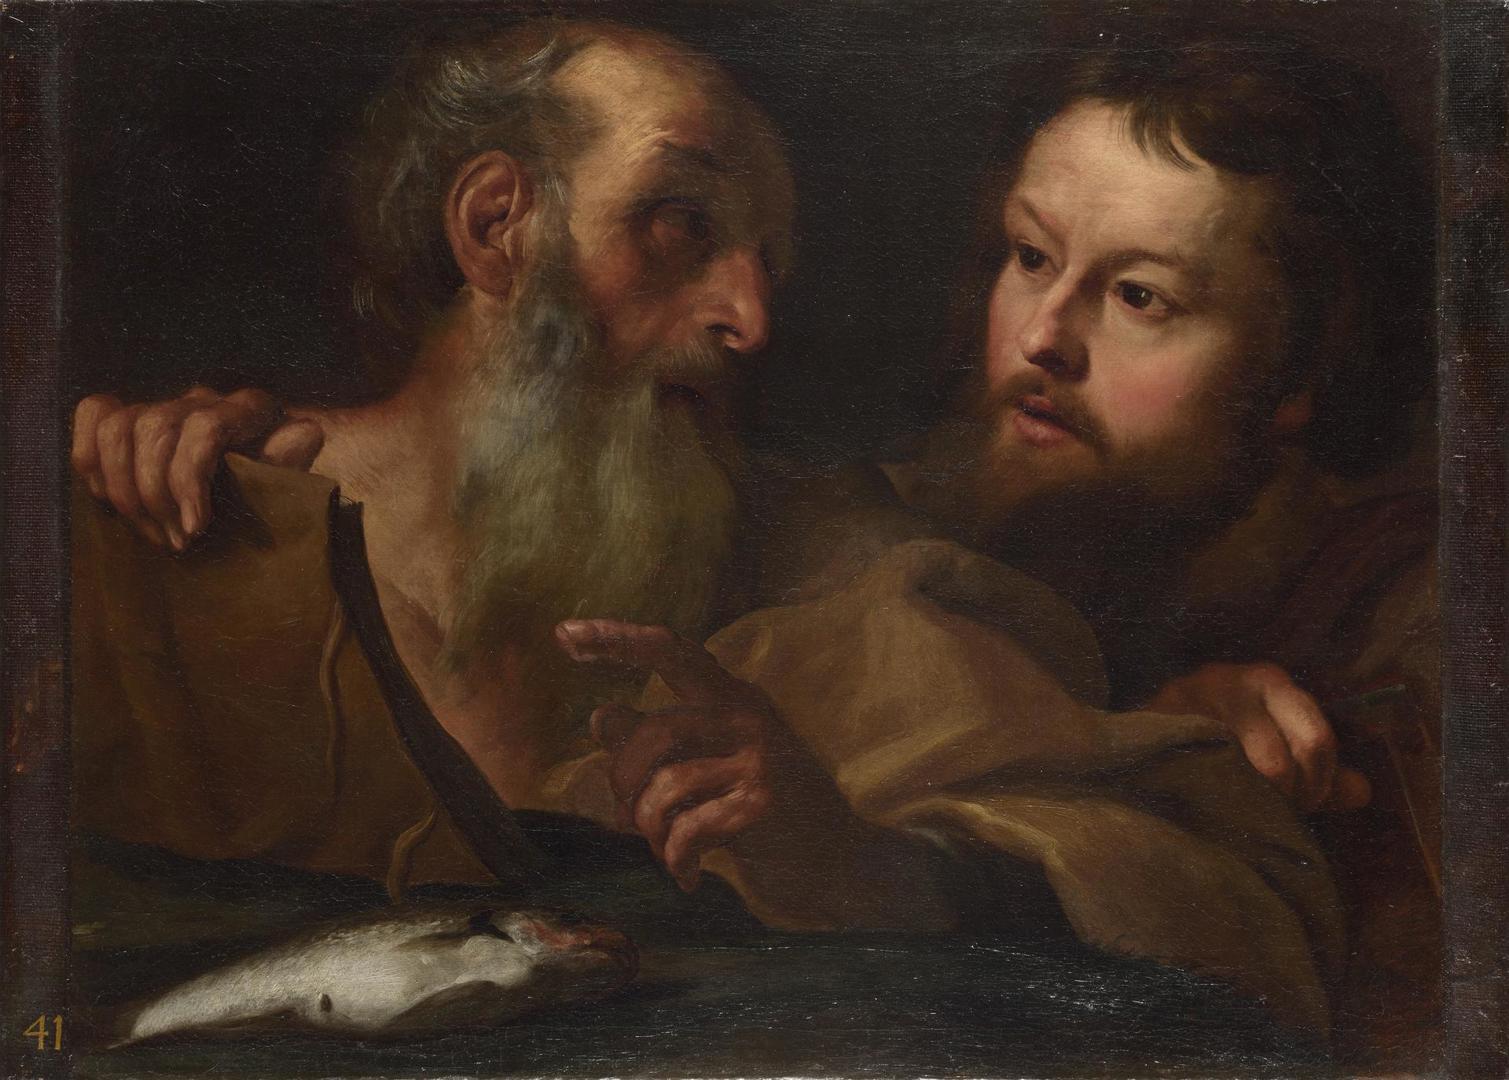 Saints Andrew and Thomas by Gian Lorenzo Bernini